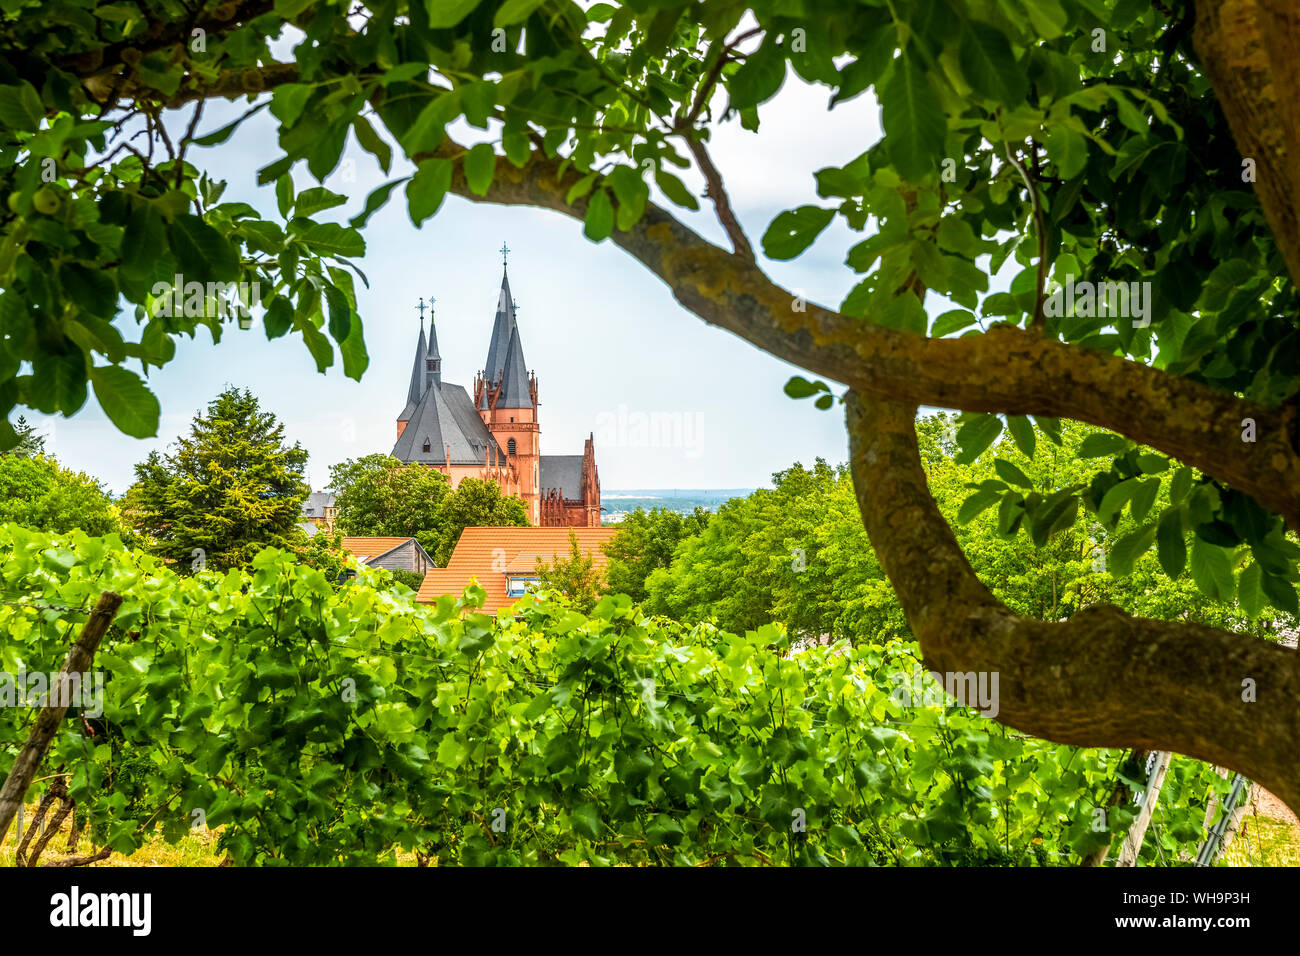 St. Catherine's church and vineyards, Oppenheim, Germany Stock Photo